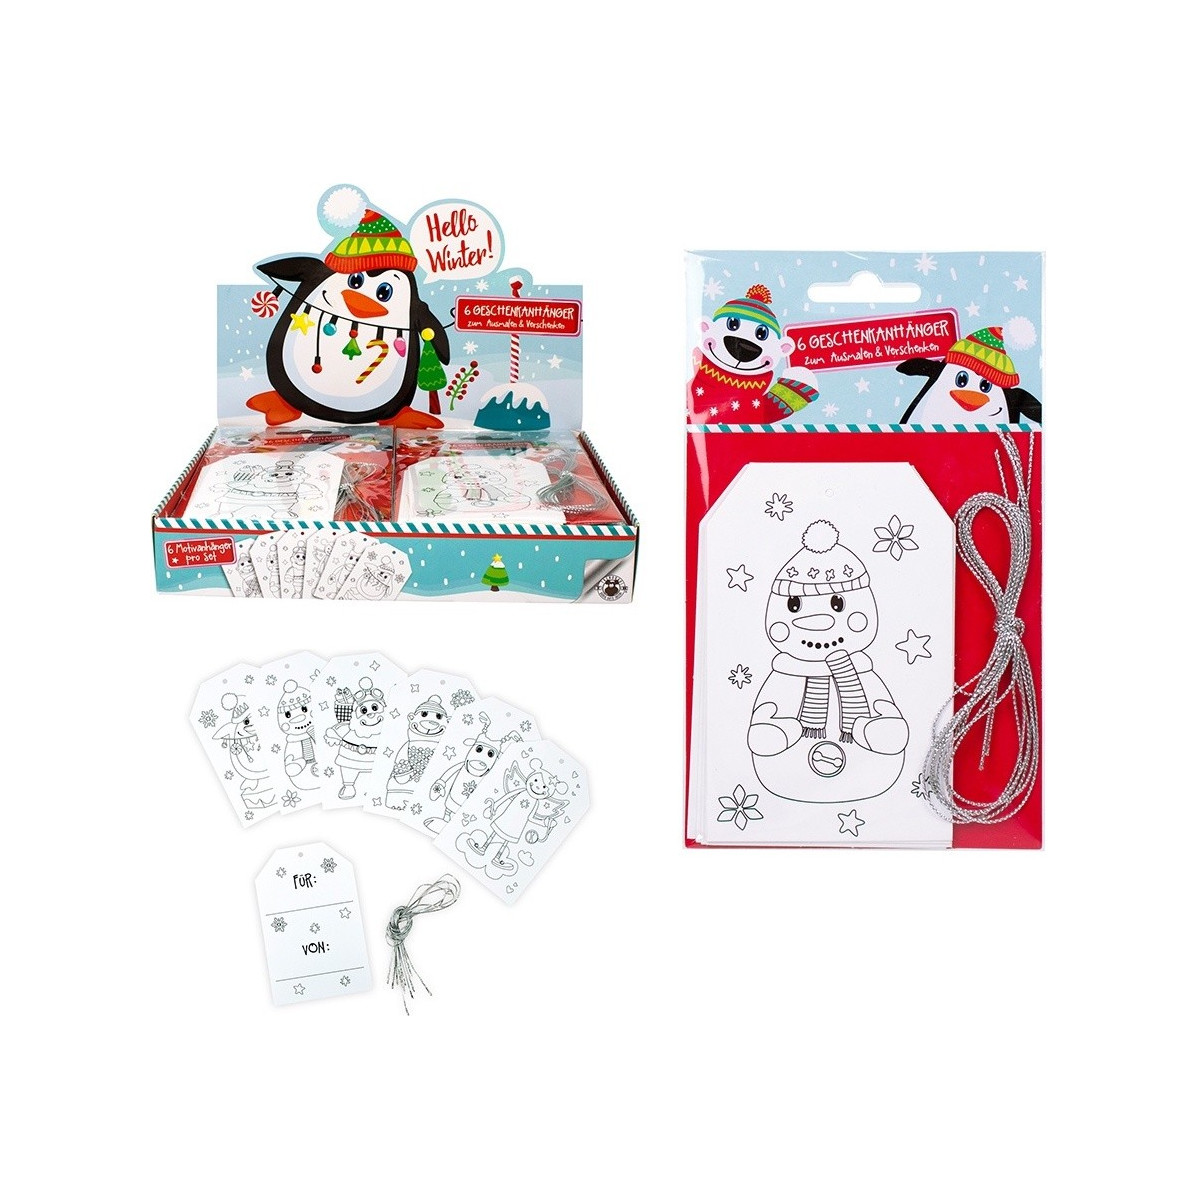 Pack de tarjetas navideñas personalizables para niños